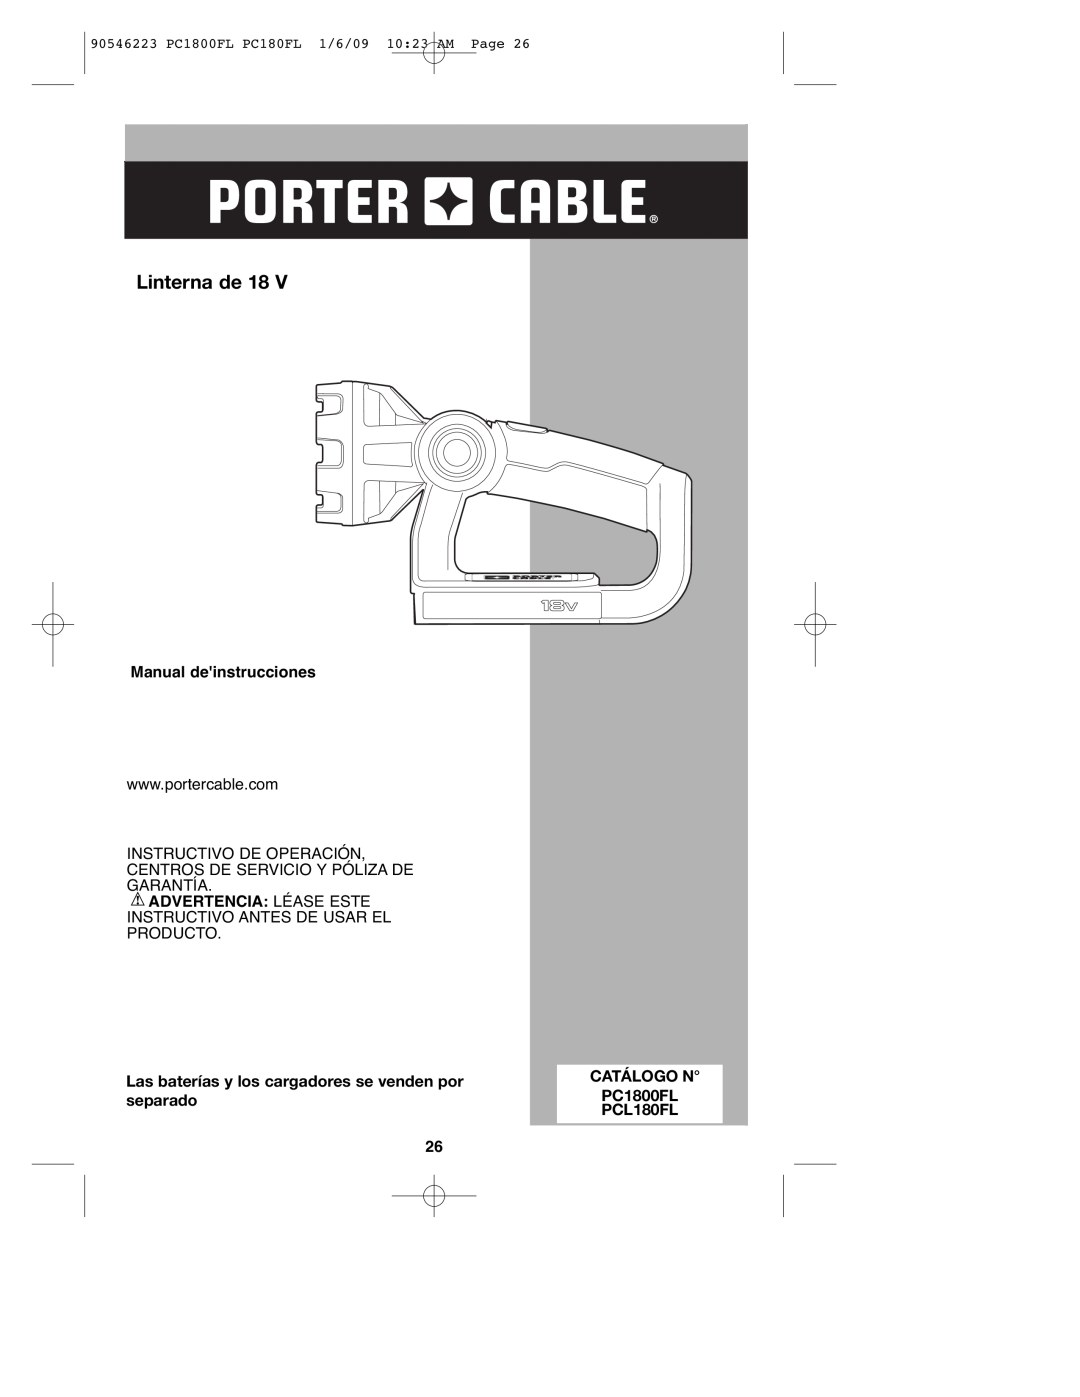 Porter-Cable PC1800FL, 90546223, PCL180FL instruction manual Linterna de, Manual deinstrucciones, Advertencia Léase Este 